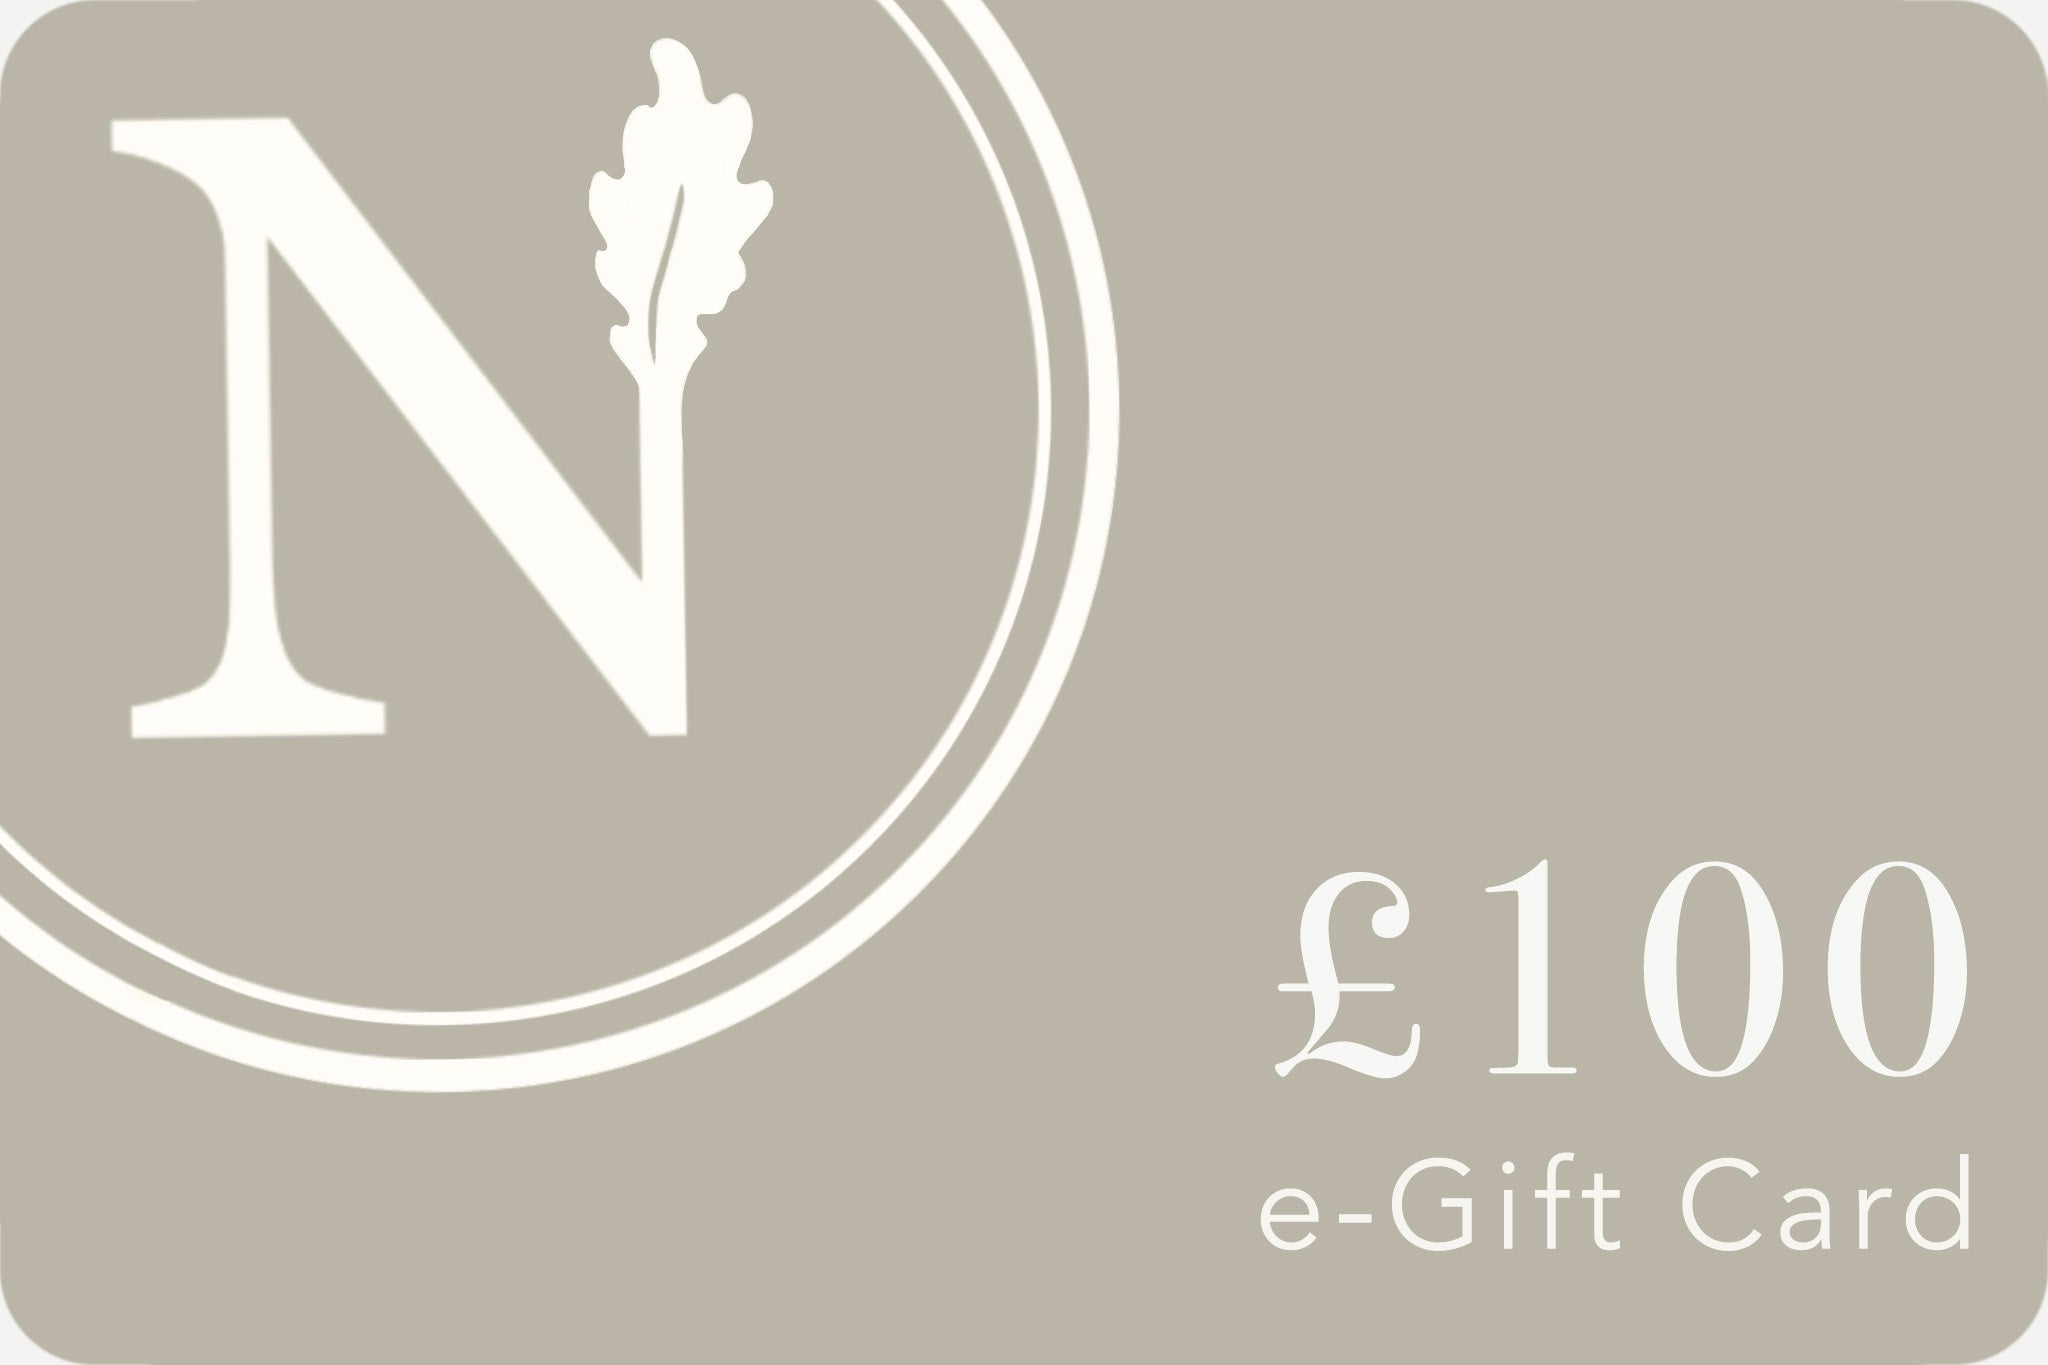 Nestie gift card £100